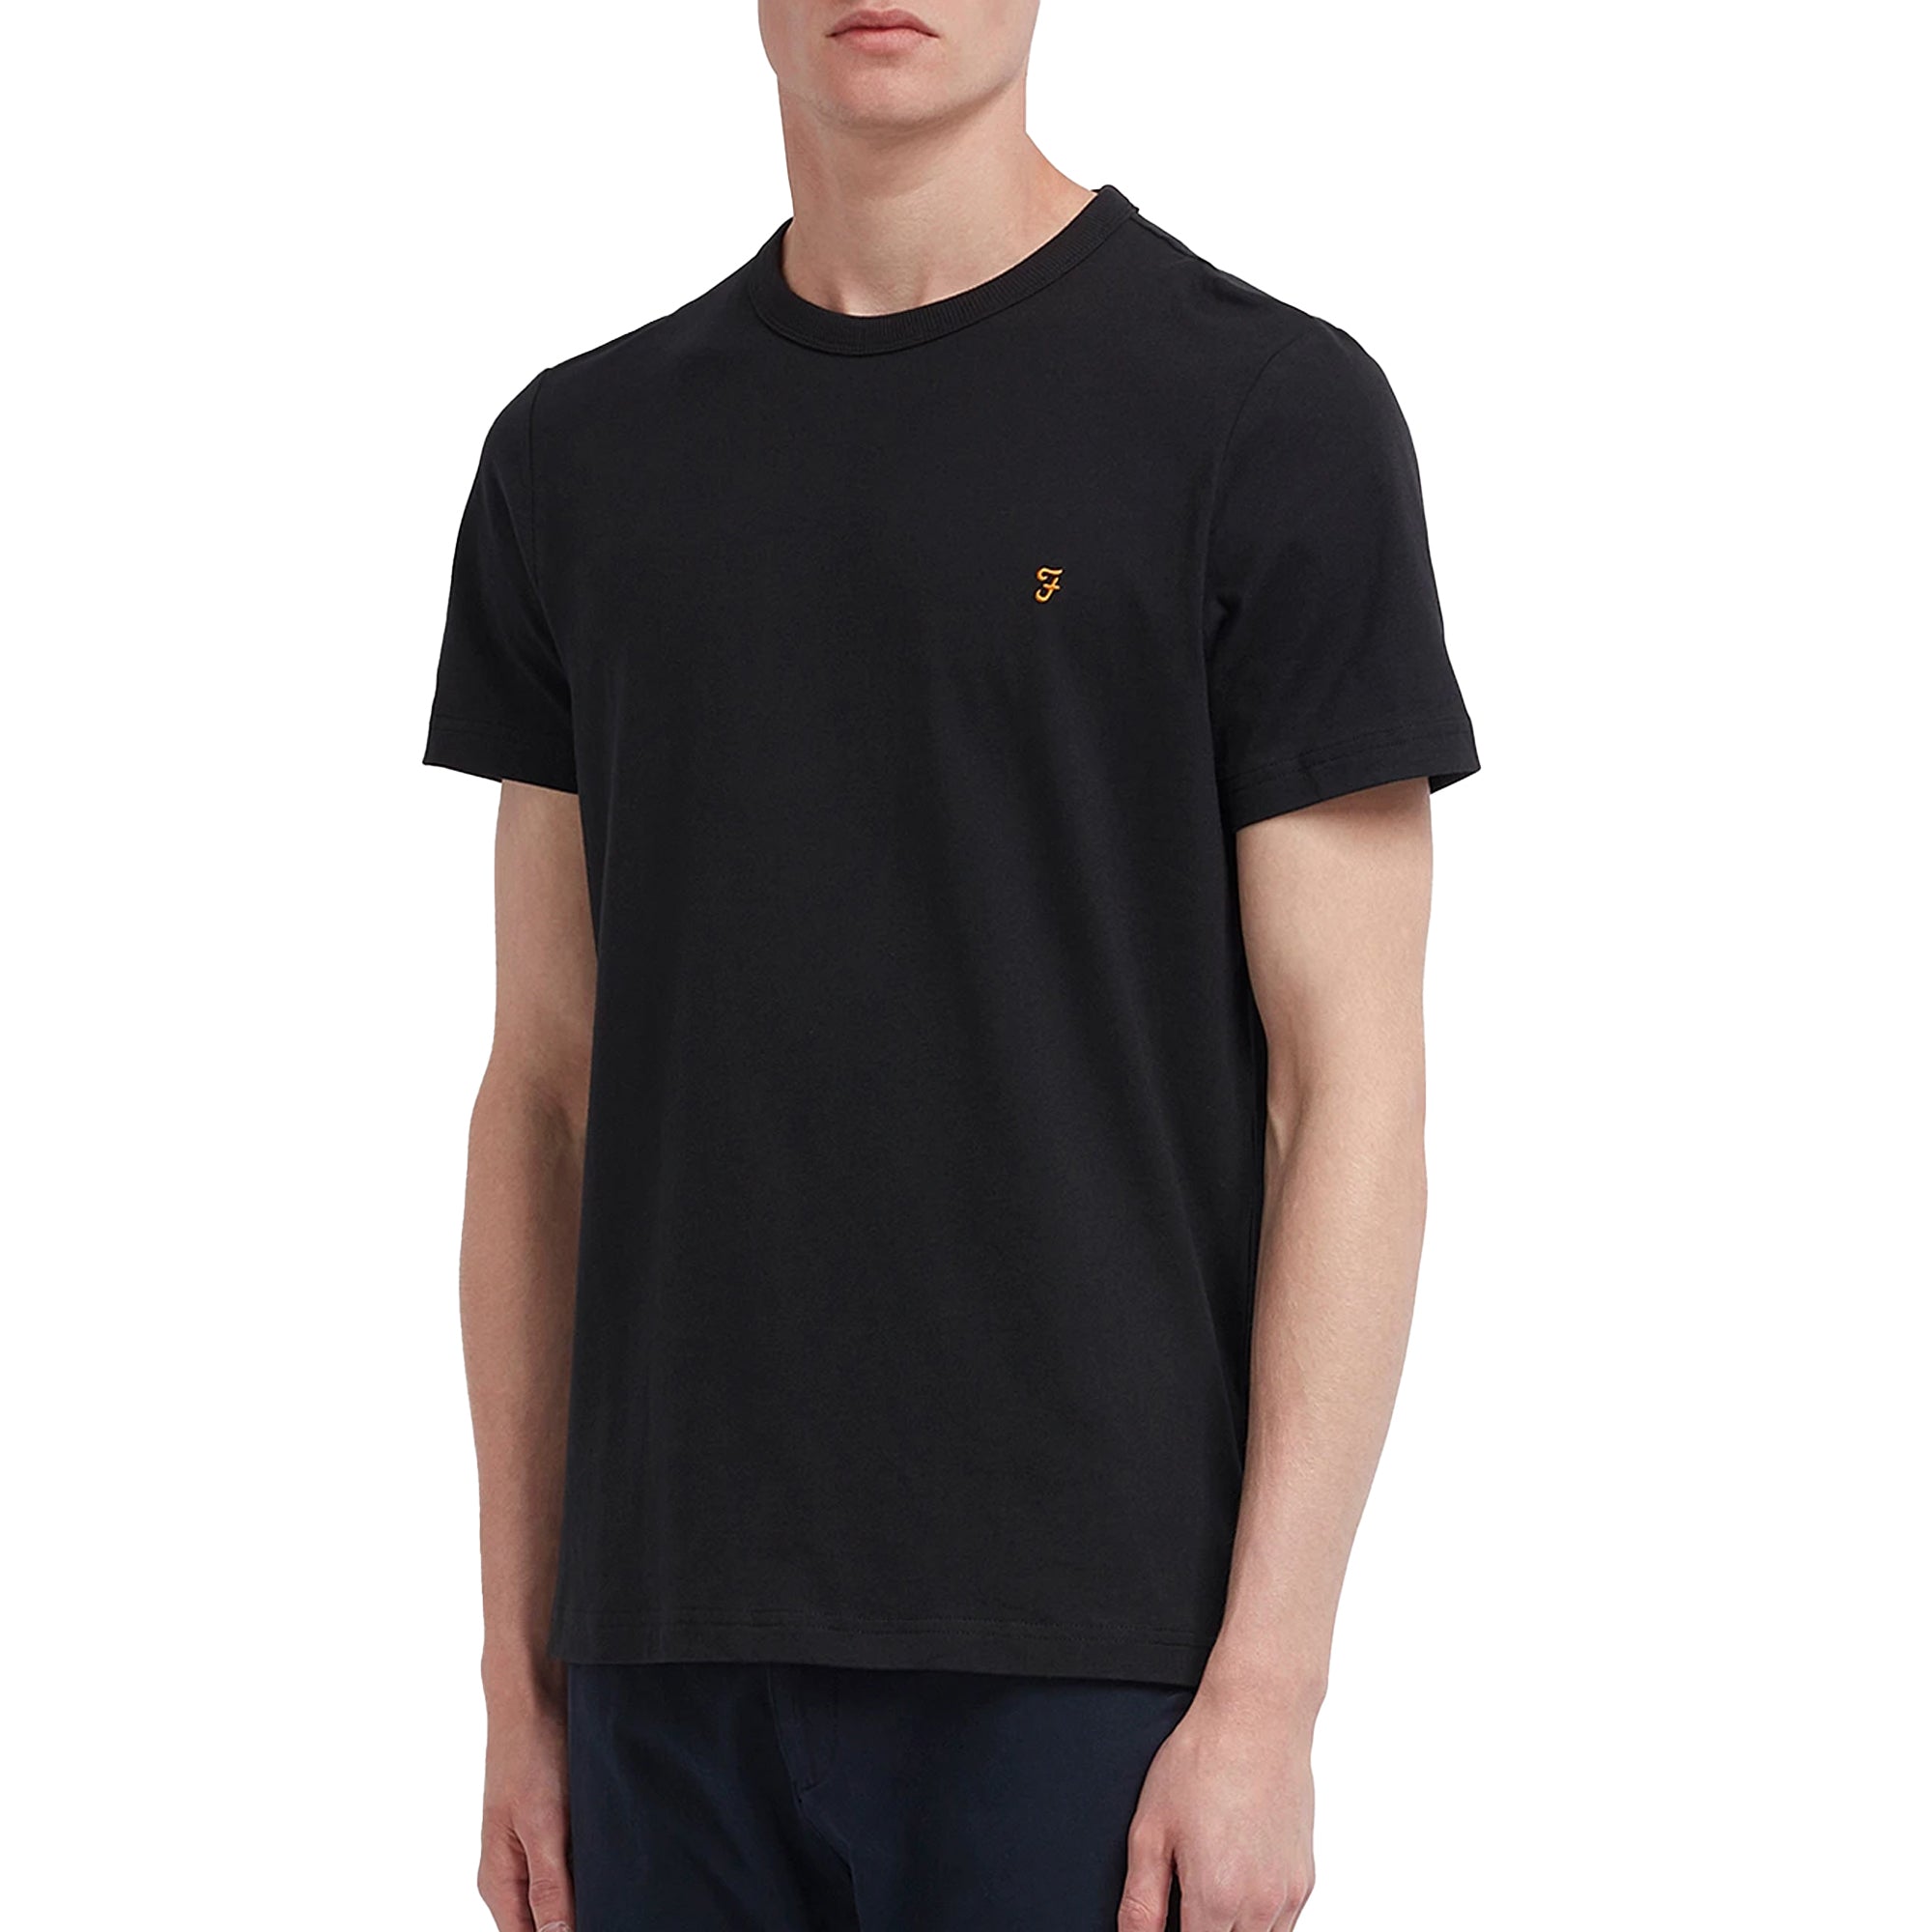 Farah New Danny T-Shirt - Black